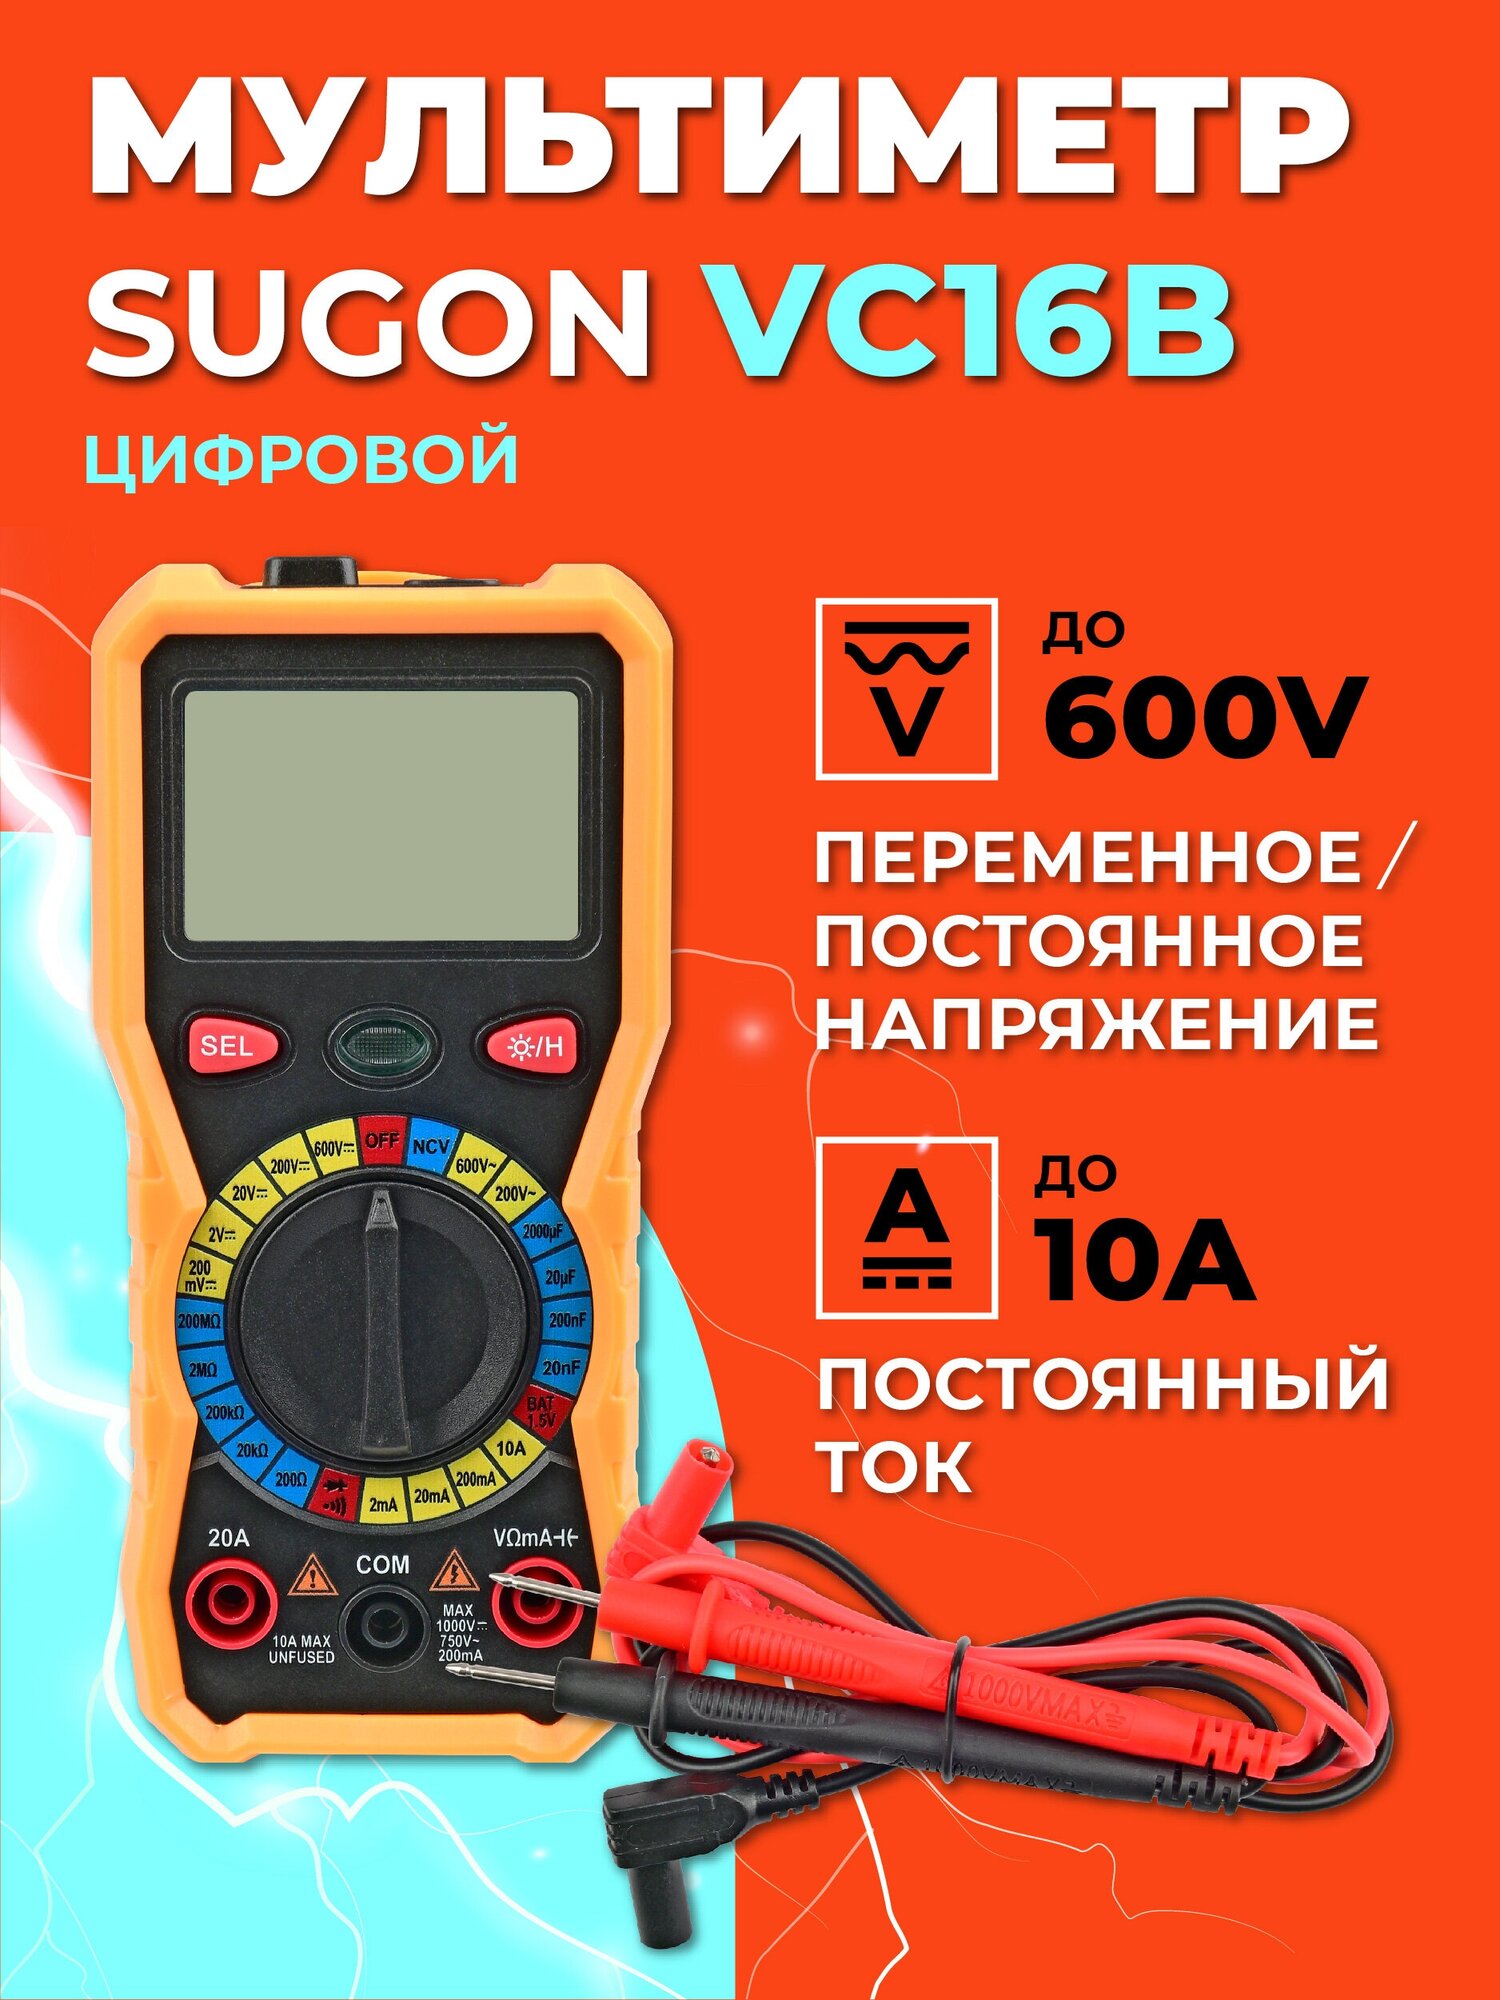 Мультиметр цифровой 750 VDC VAC до 10 А Sugon VC16B/Ампервольтомметр/Мультиметр с дисплеем